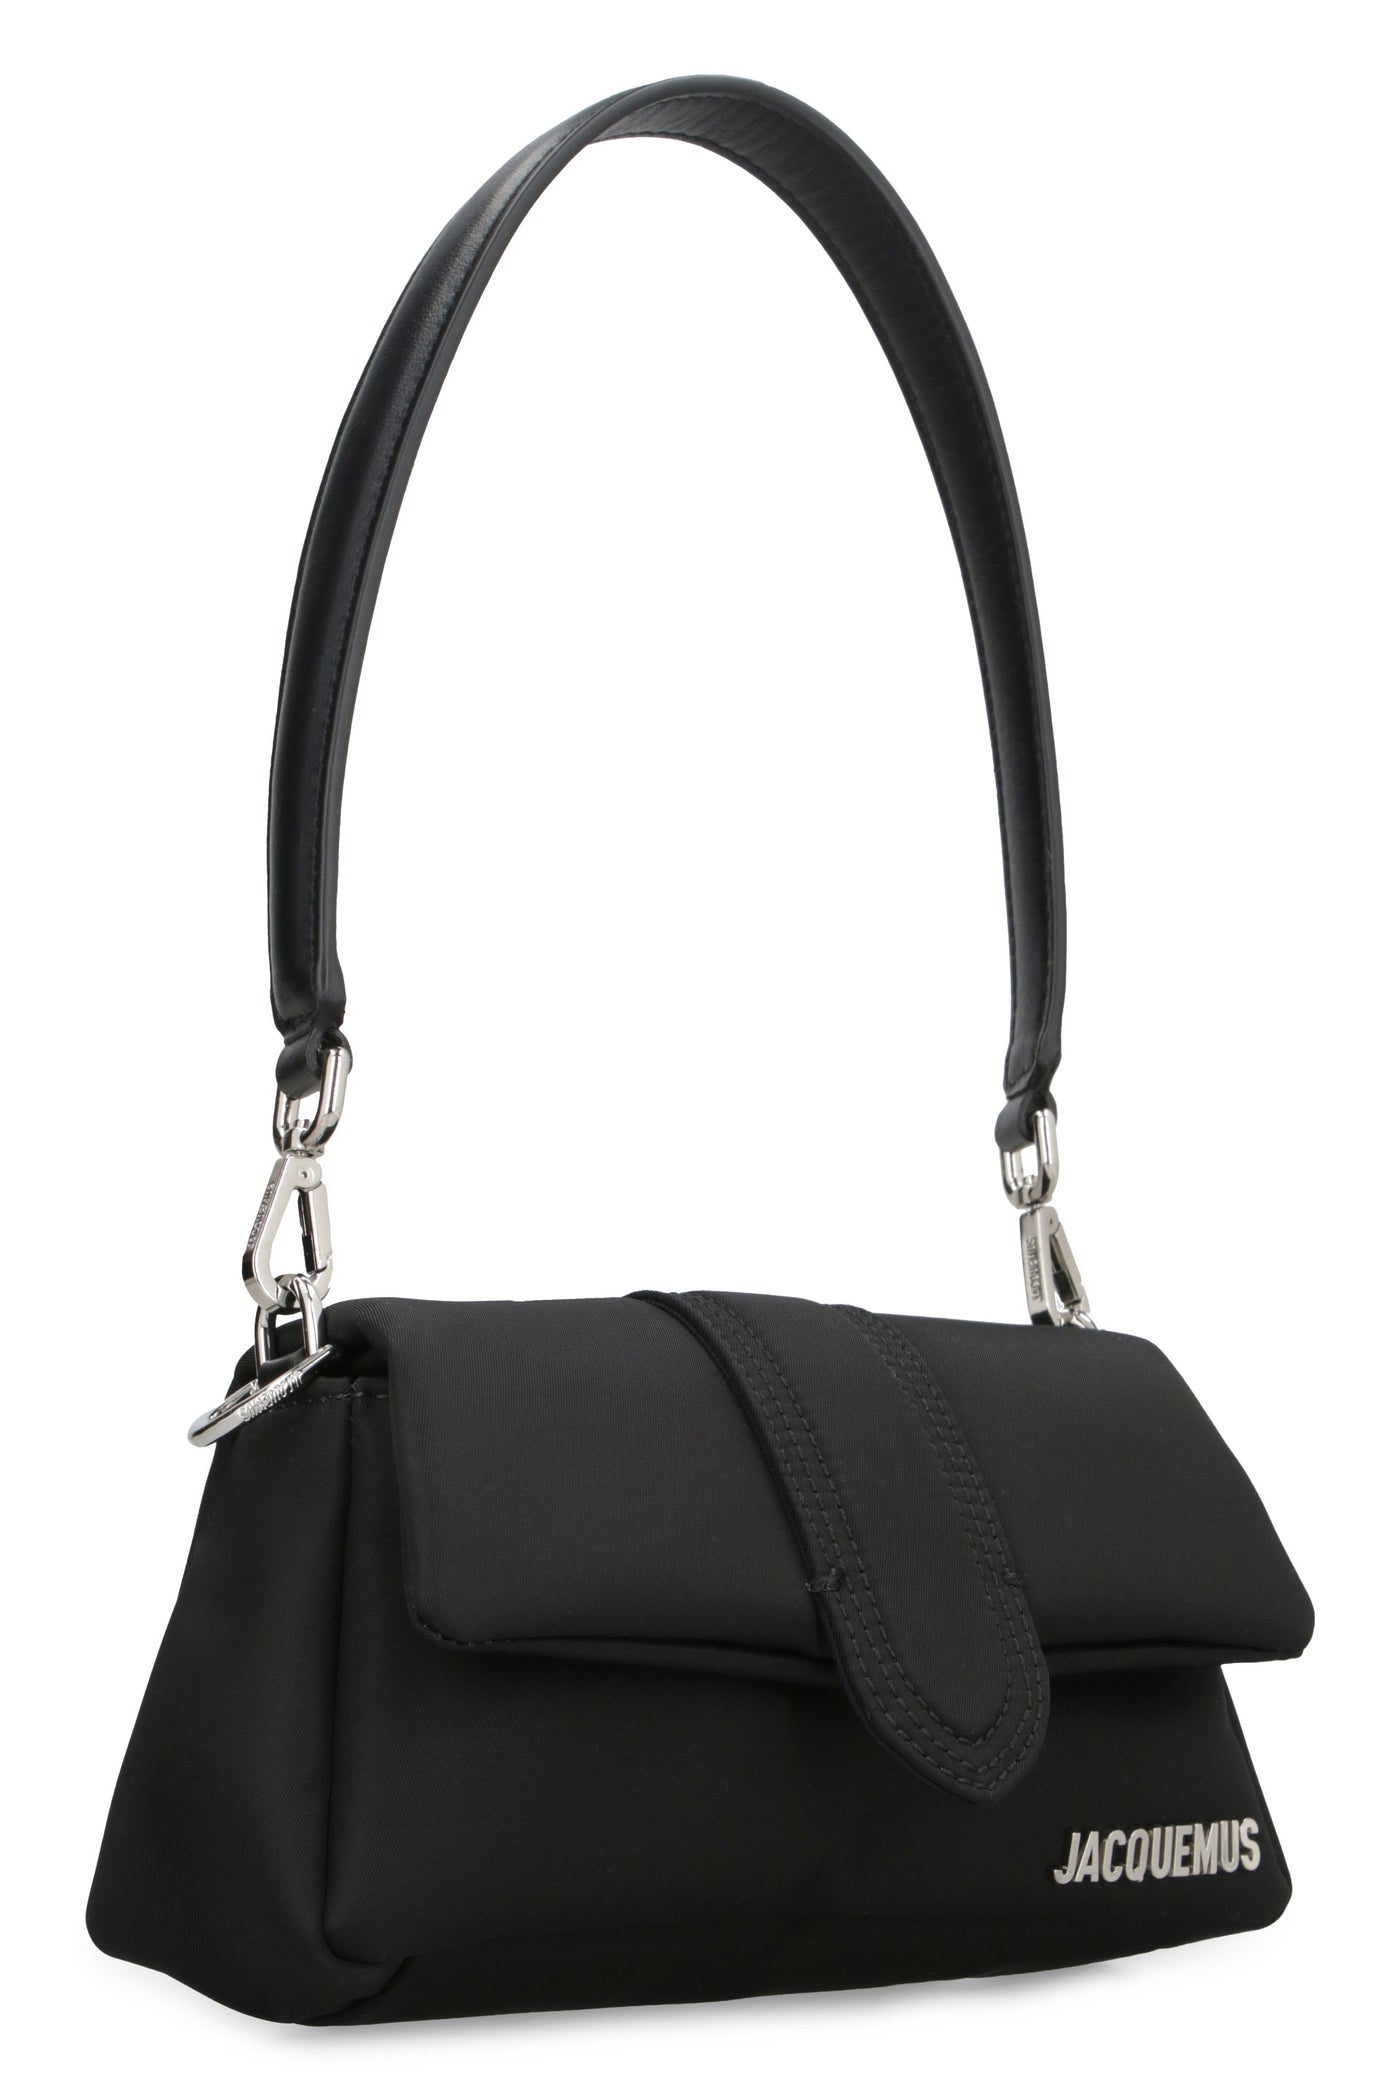 Jacquemus Le Bambimou Nylon Shoulder Bag, 990 Black, Women's, Handbags & Purses Shoulder Bags